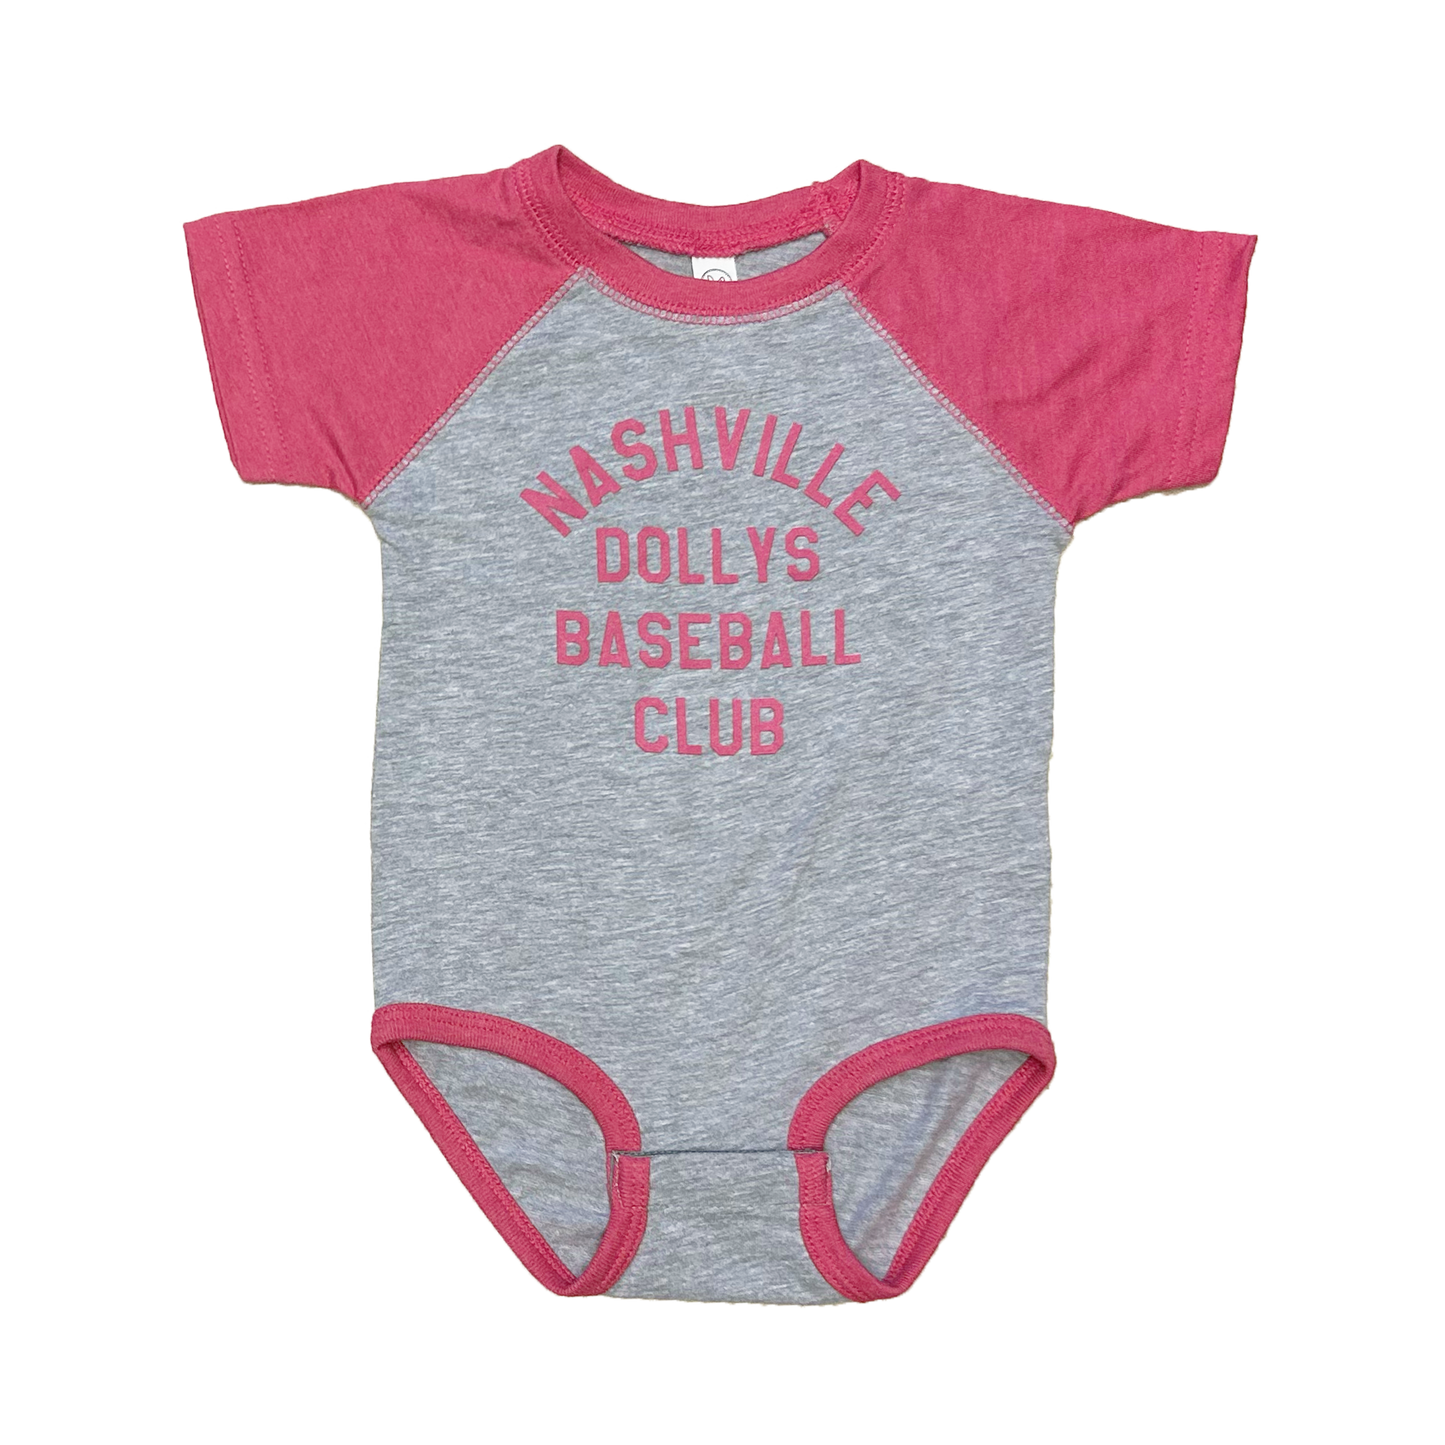 Nashville Dollys Baseball Club Pink Onesie